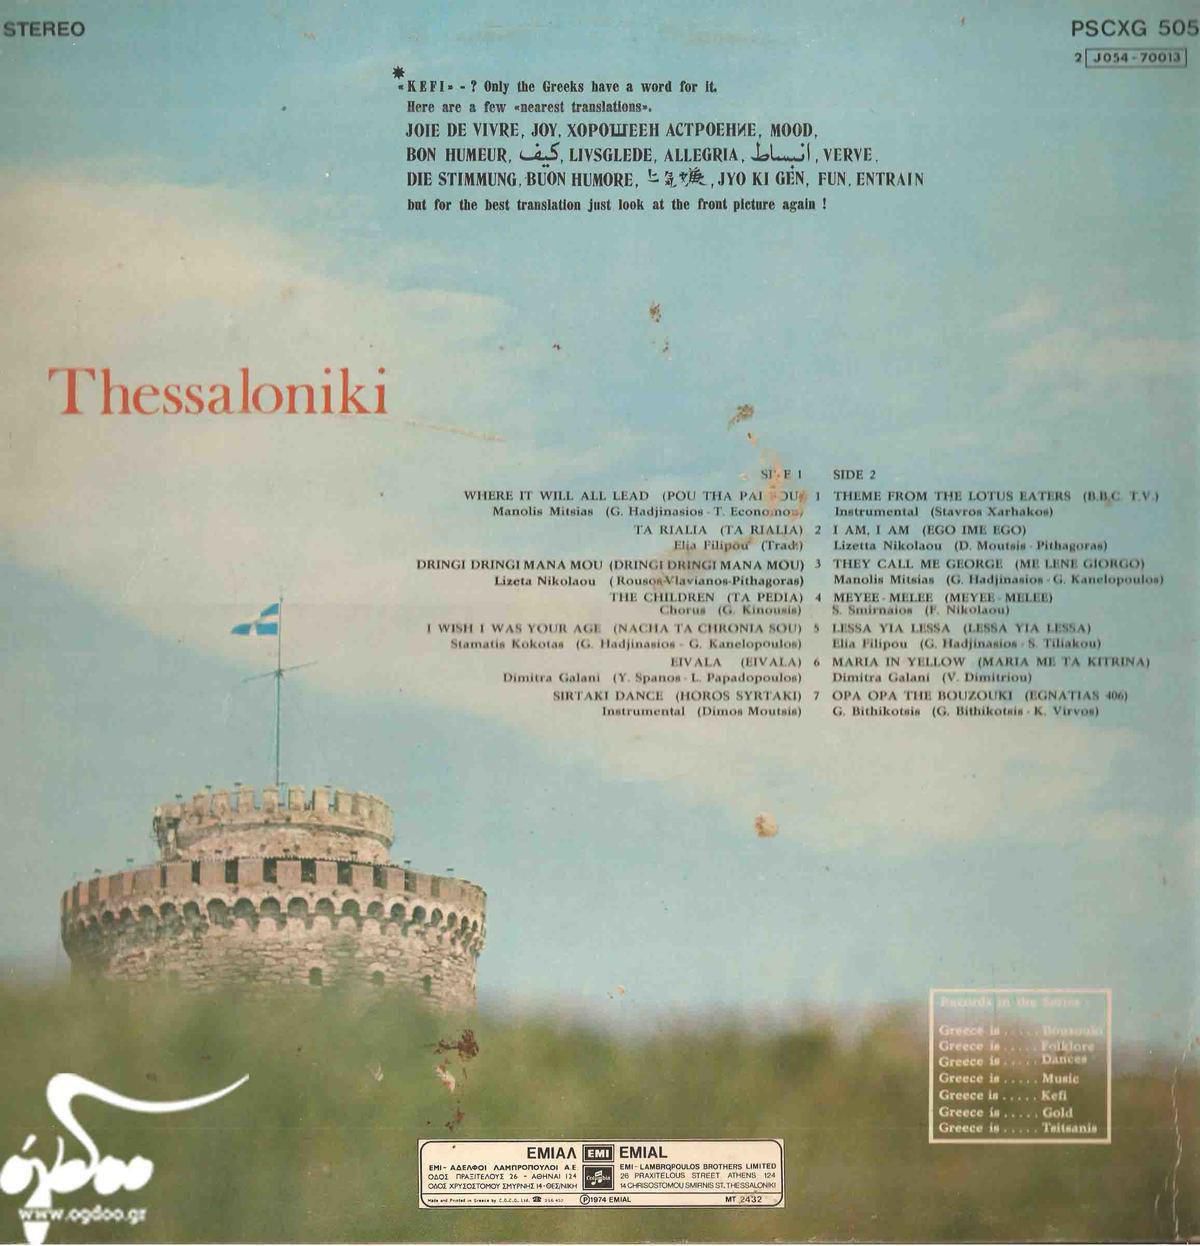 04.1974 Greece is Kefi Thessaloniki2